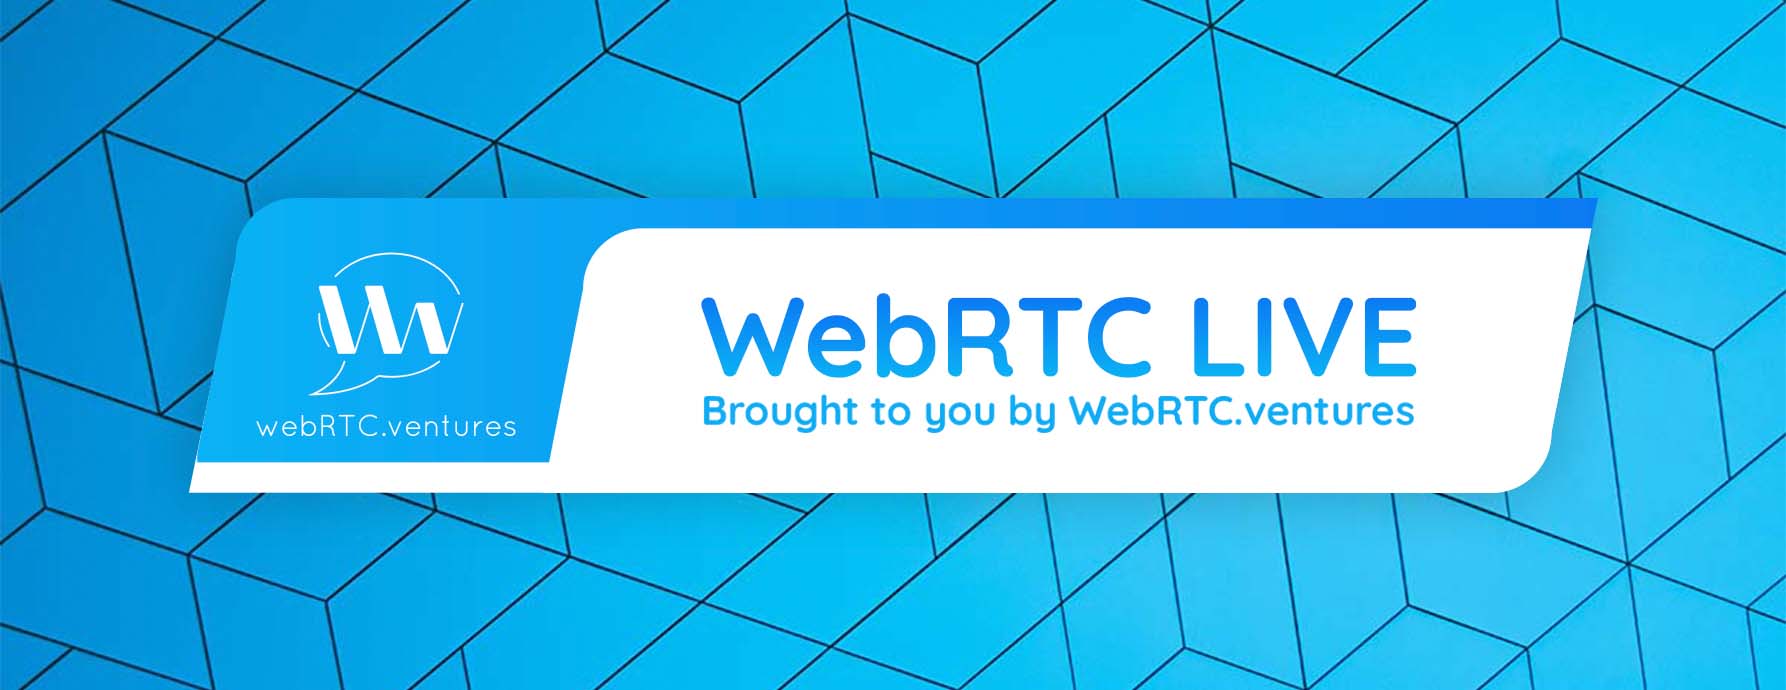 WebRTC Live